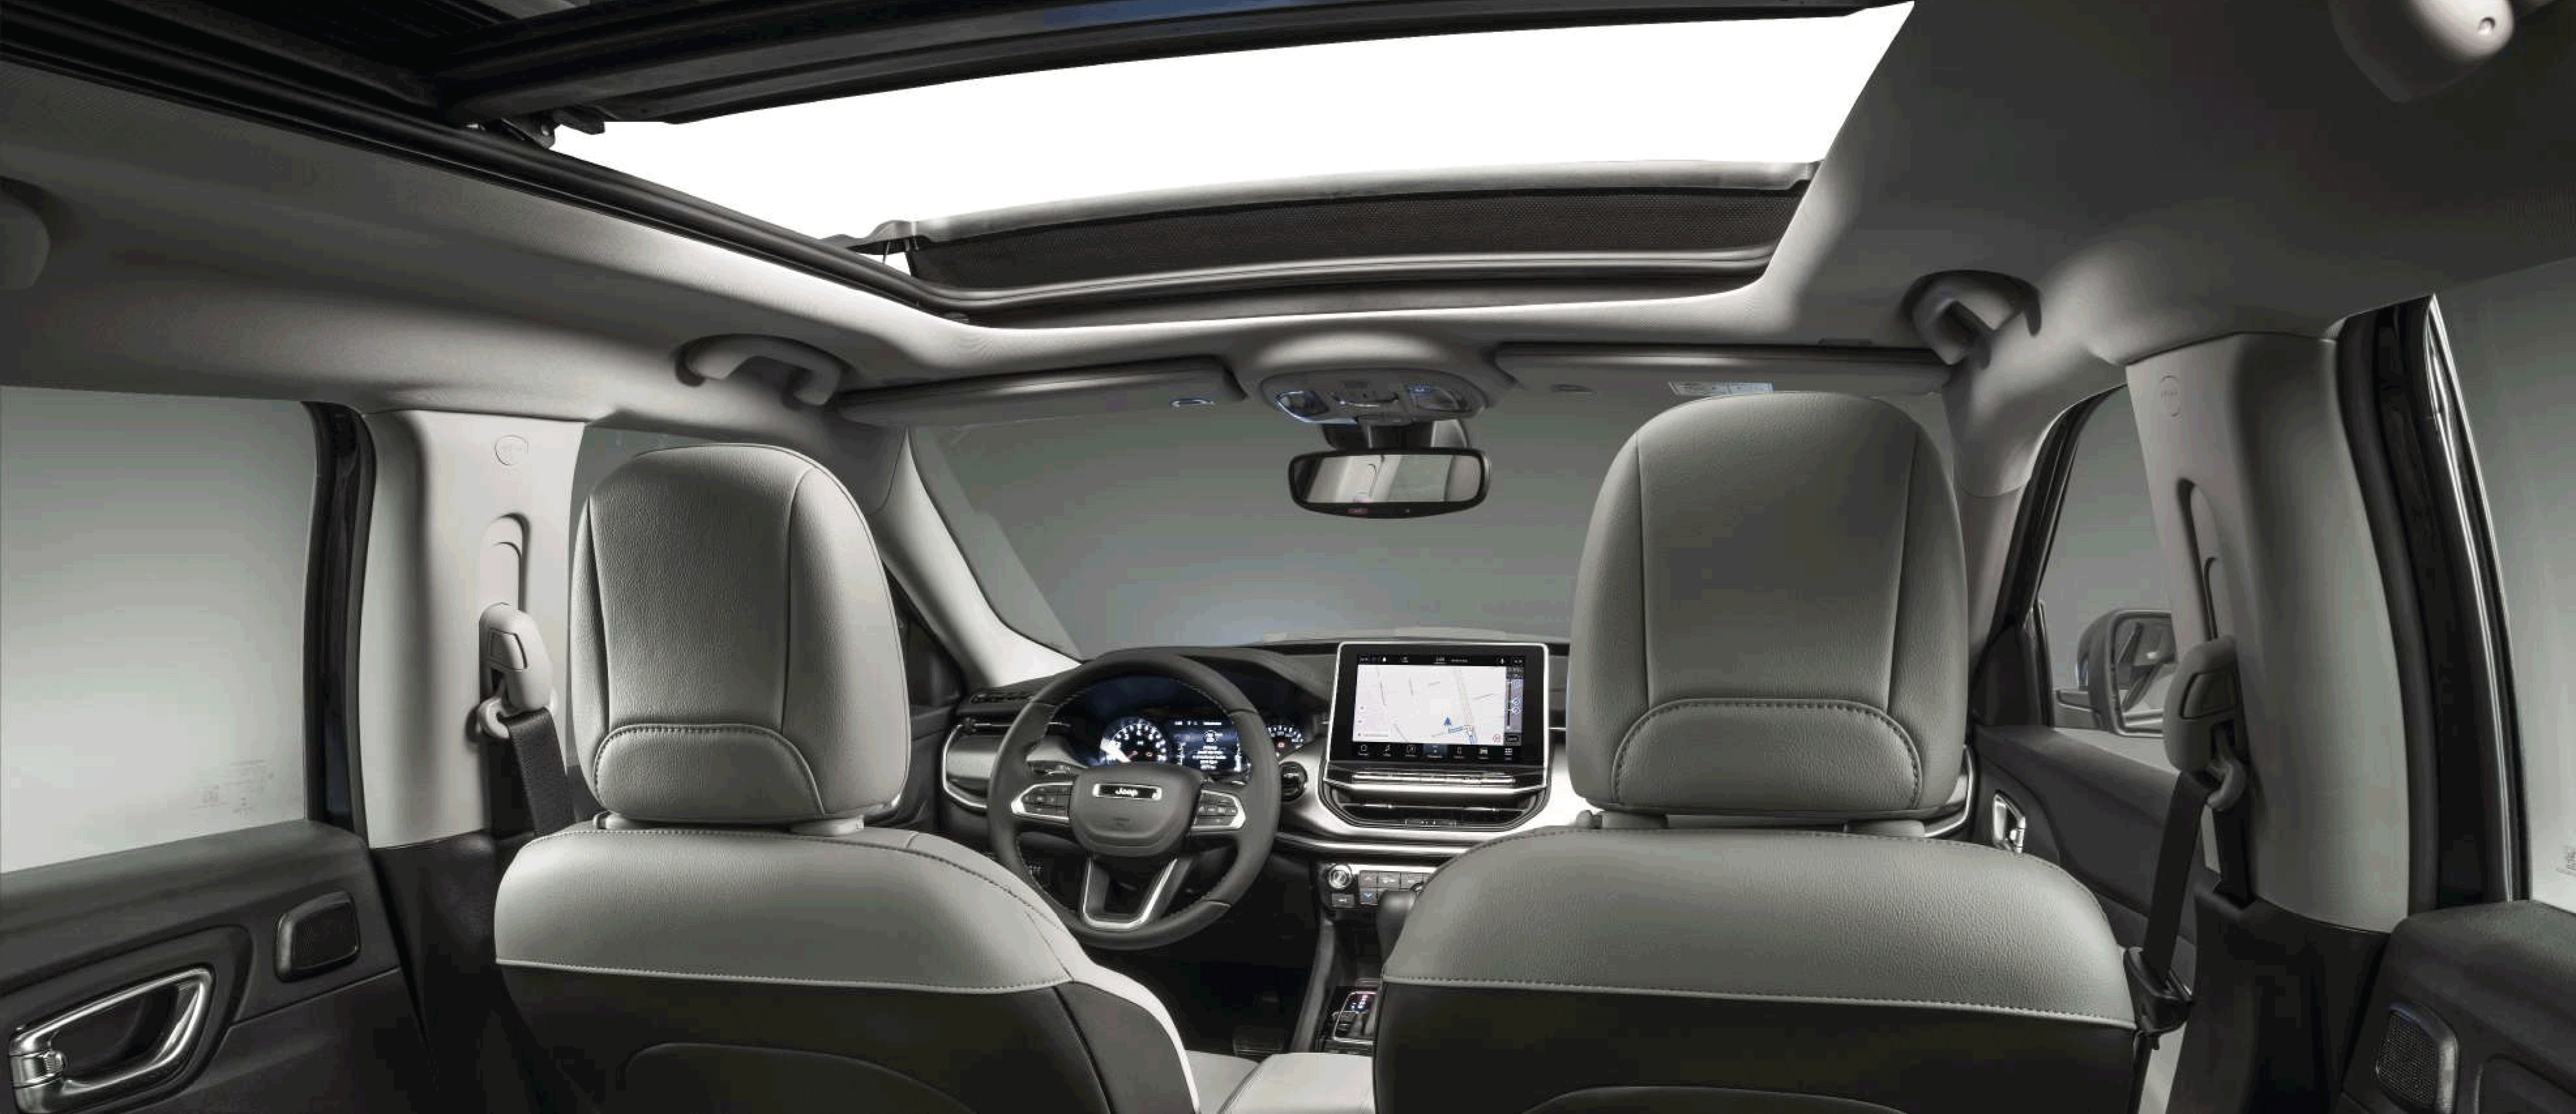 Interior de un Jeep Compass